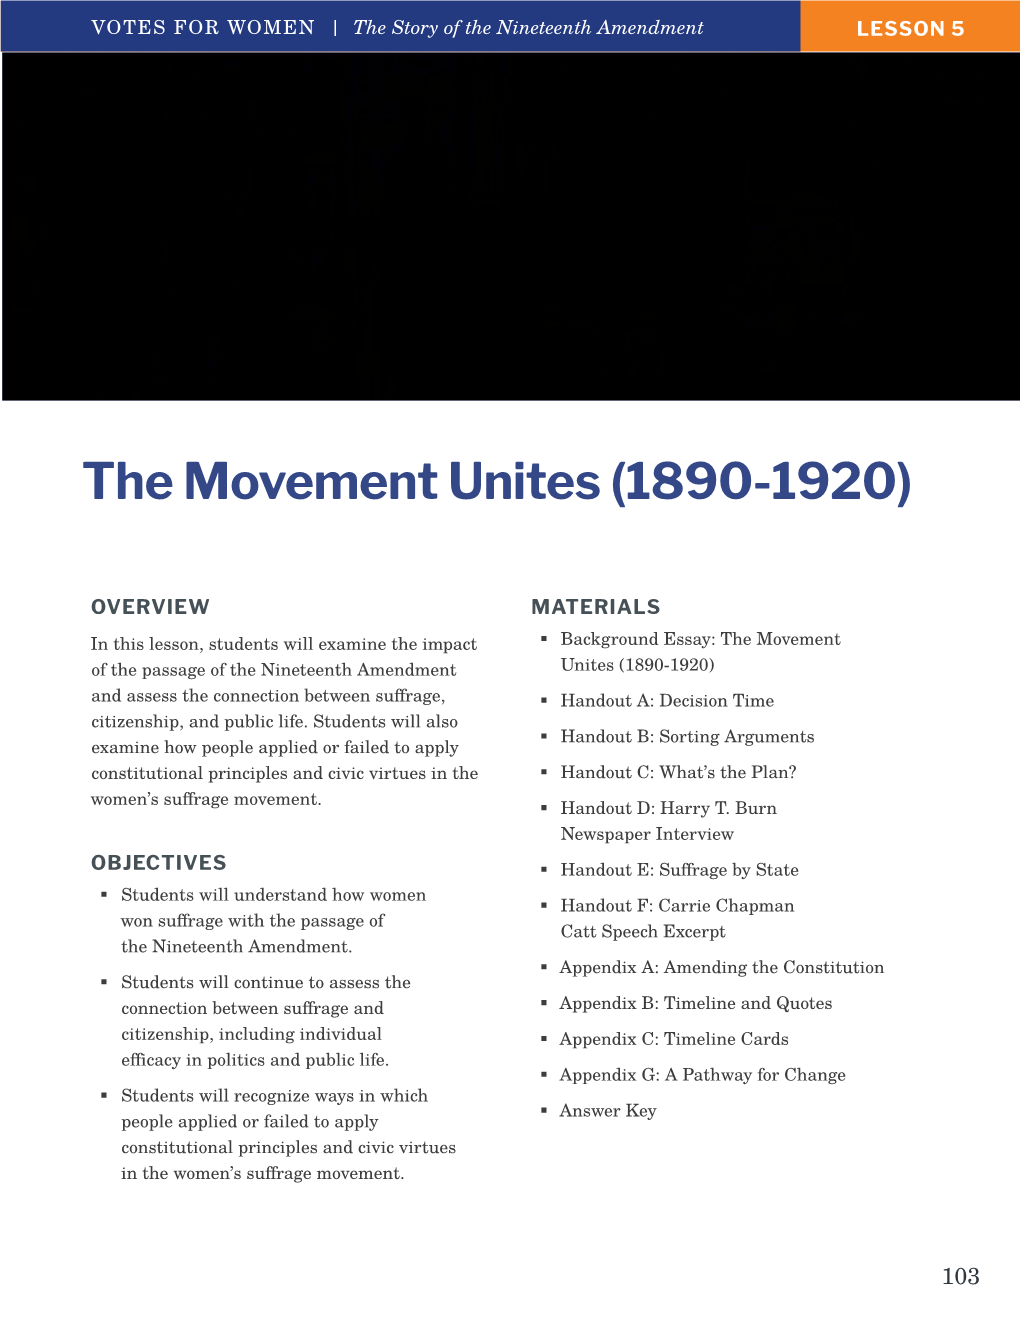 The Movement Unites (1890-1920)